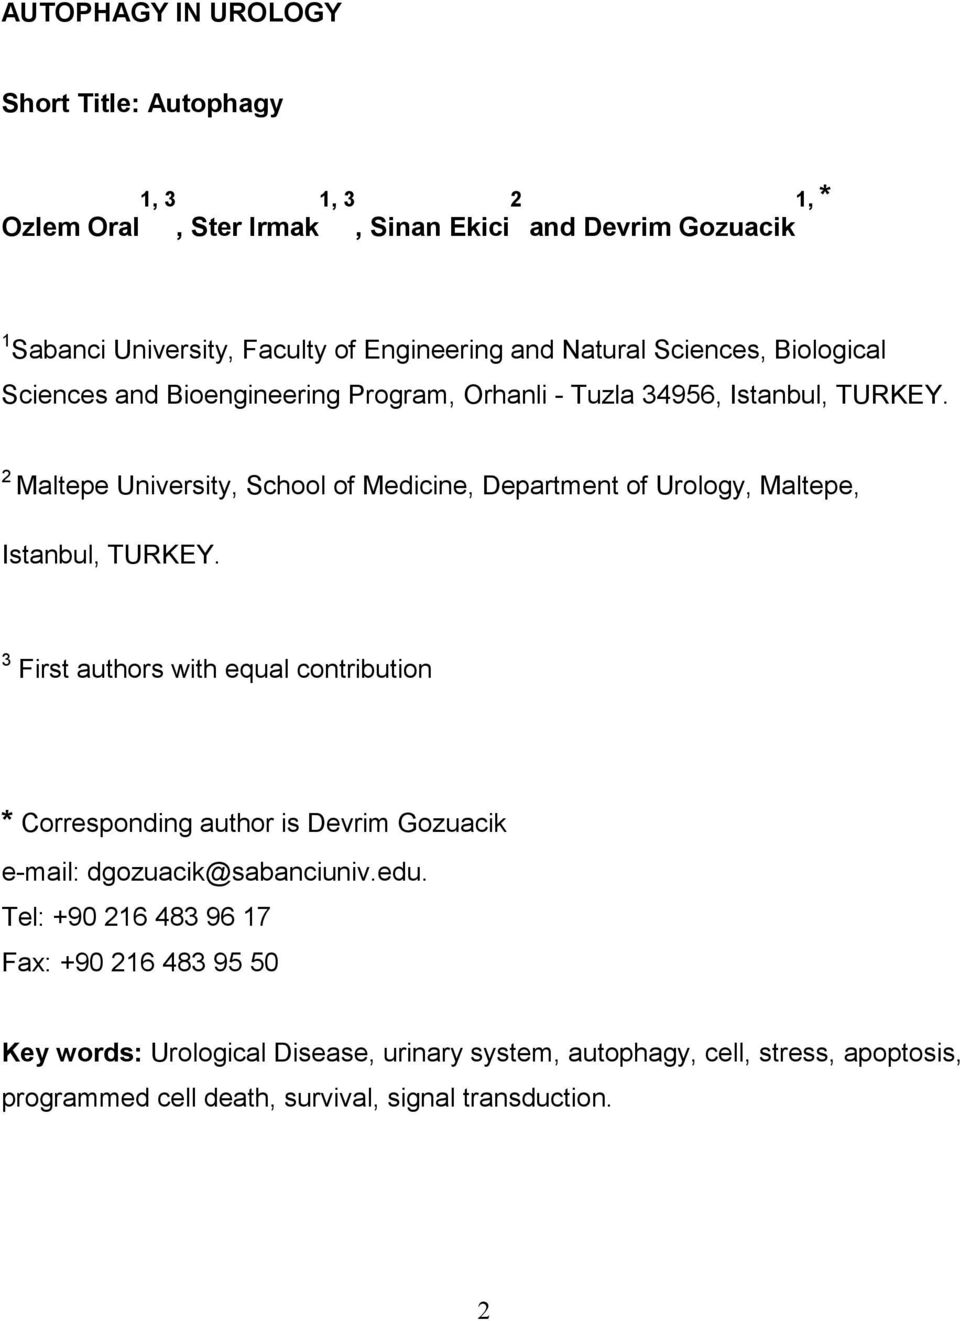 2 Maltepe University, School of Medicine, Department of Urology, Maltepe, Istanbul, TURKEY.